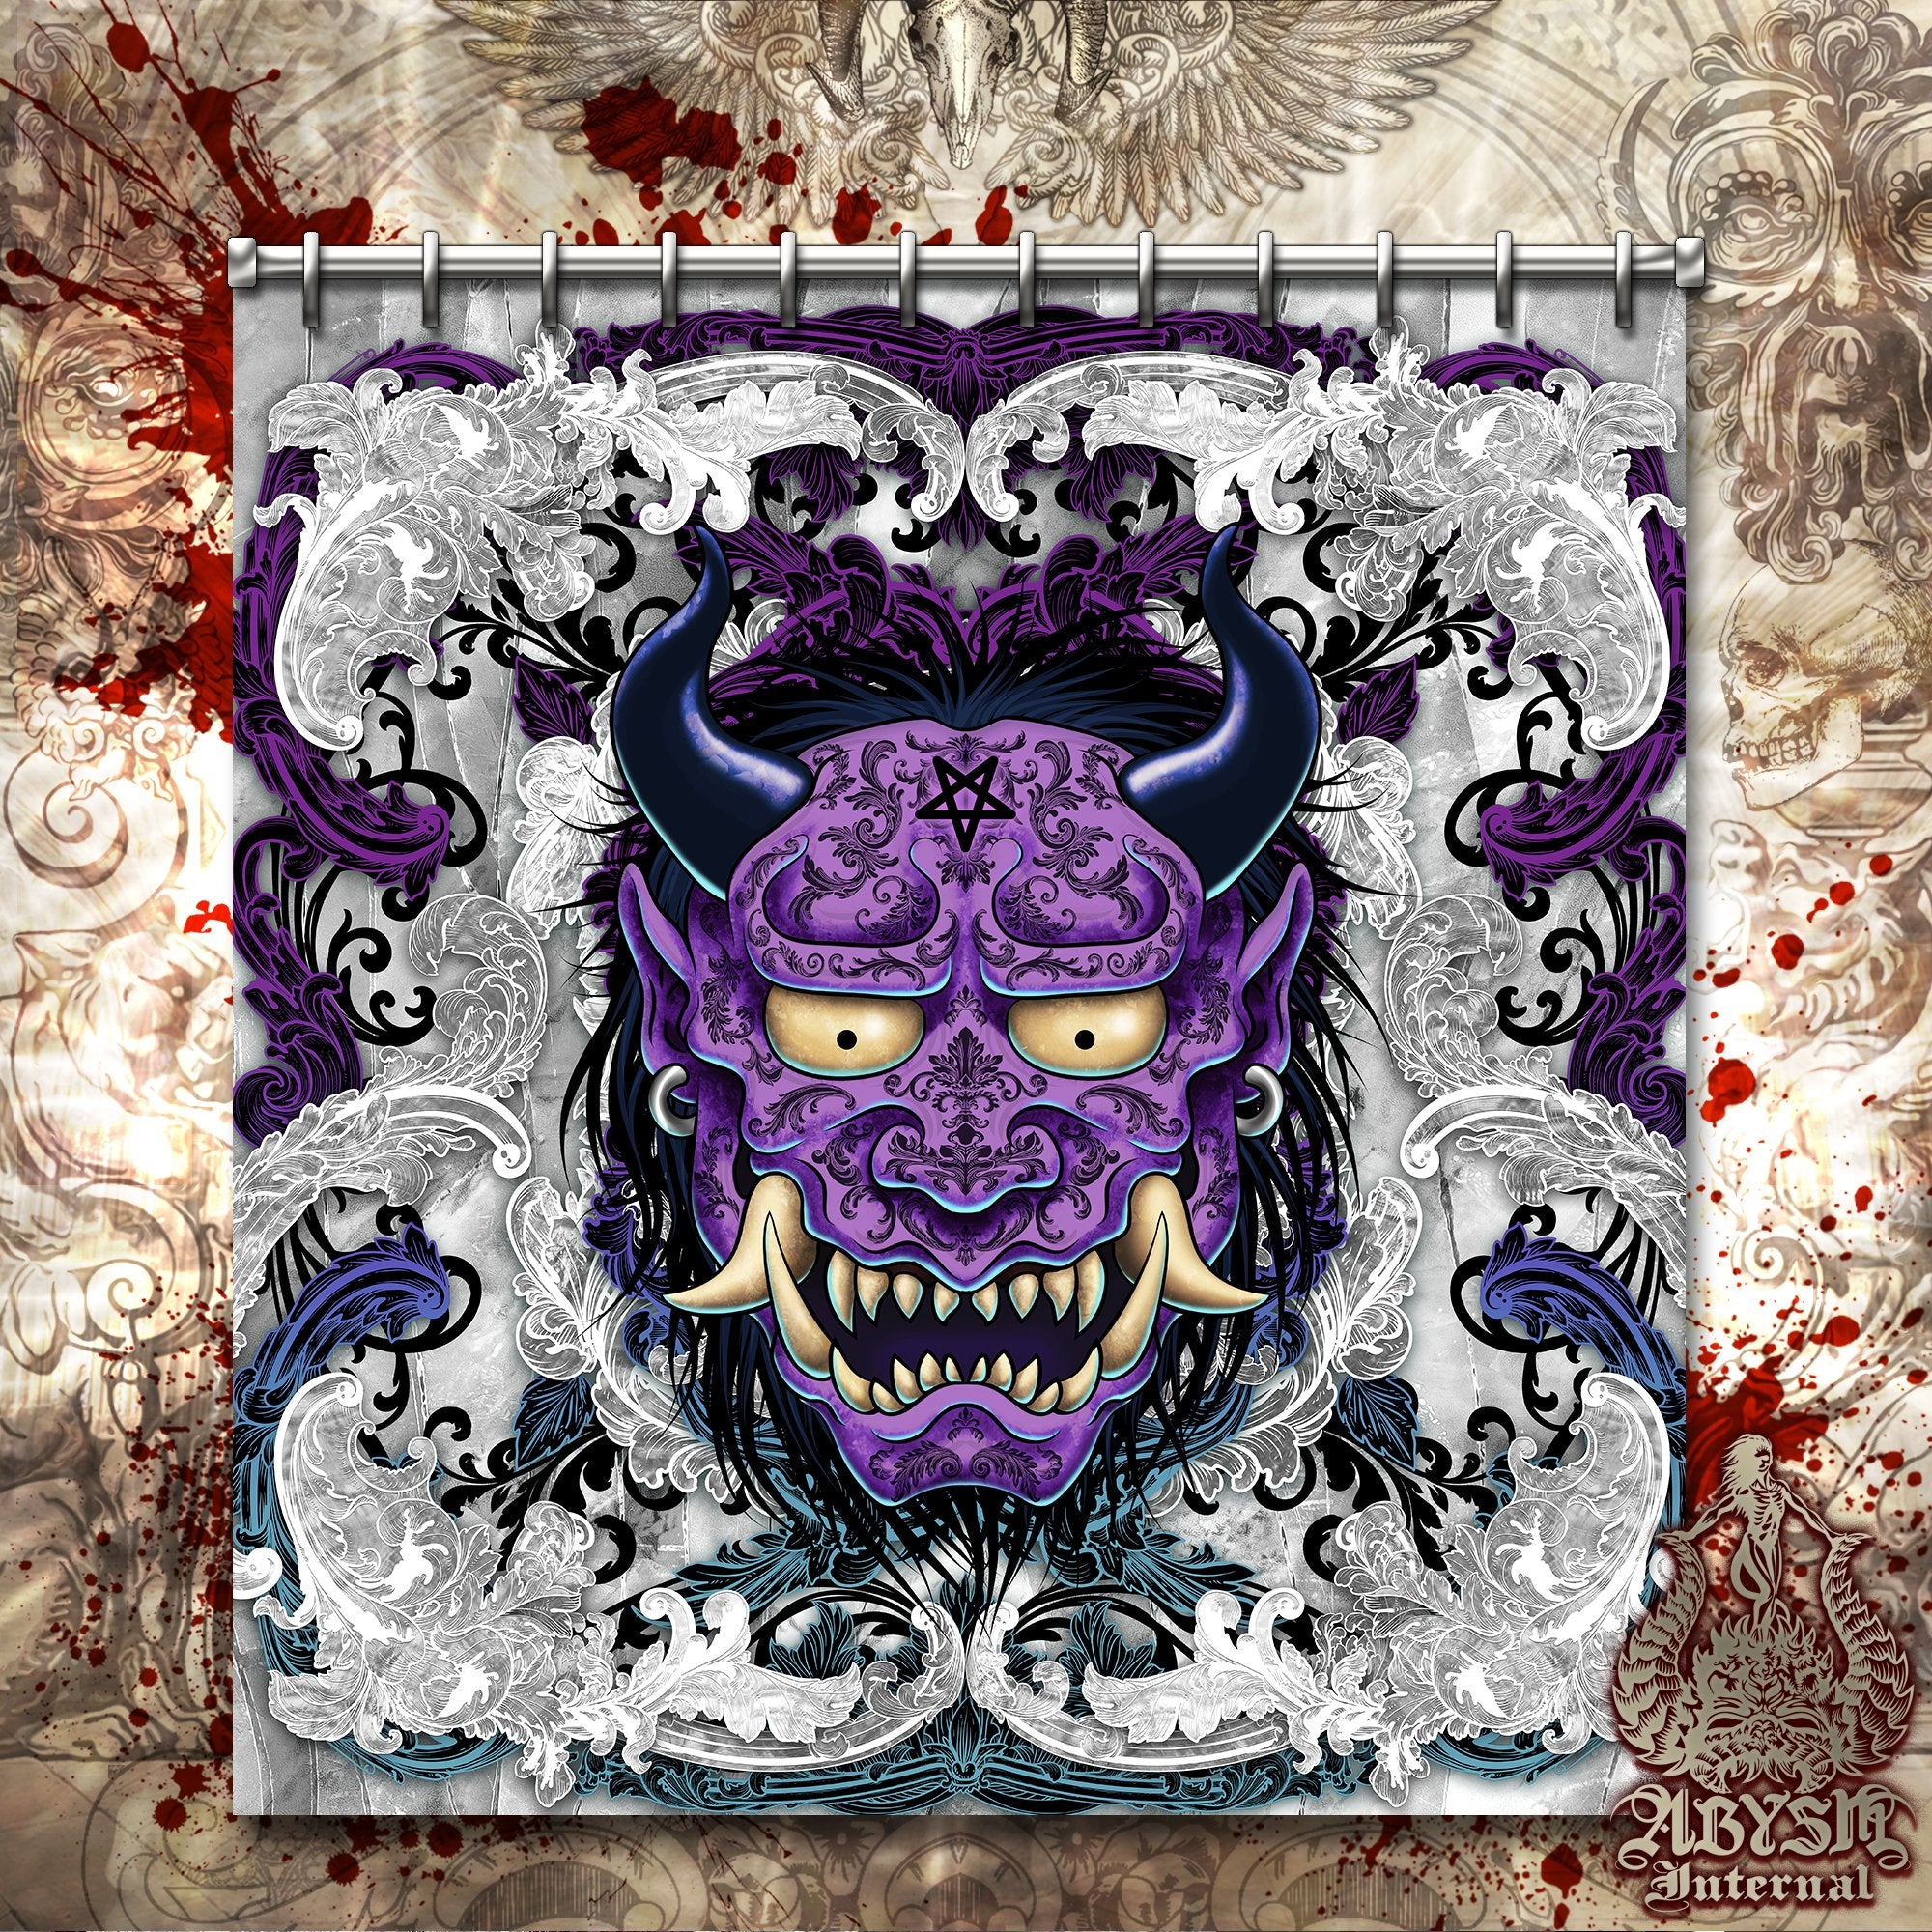 Oni Shower Curtain, 71x74 inches, Anime, Gothic Bathroom Decor, Purple & White Goth, Japanese Demon, 2 Colors - Abysm Internal